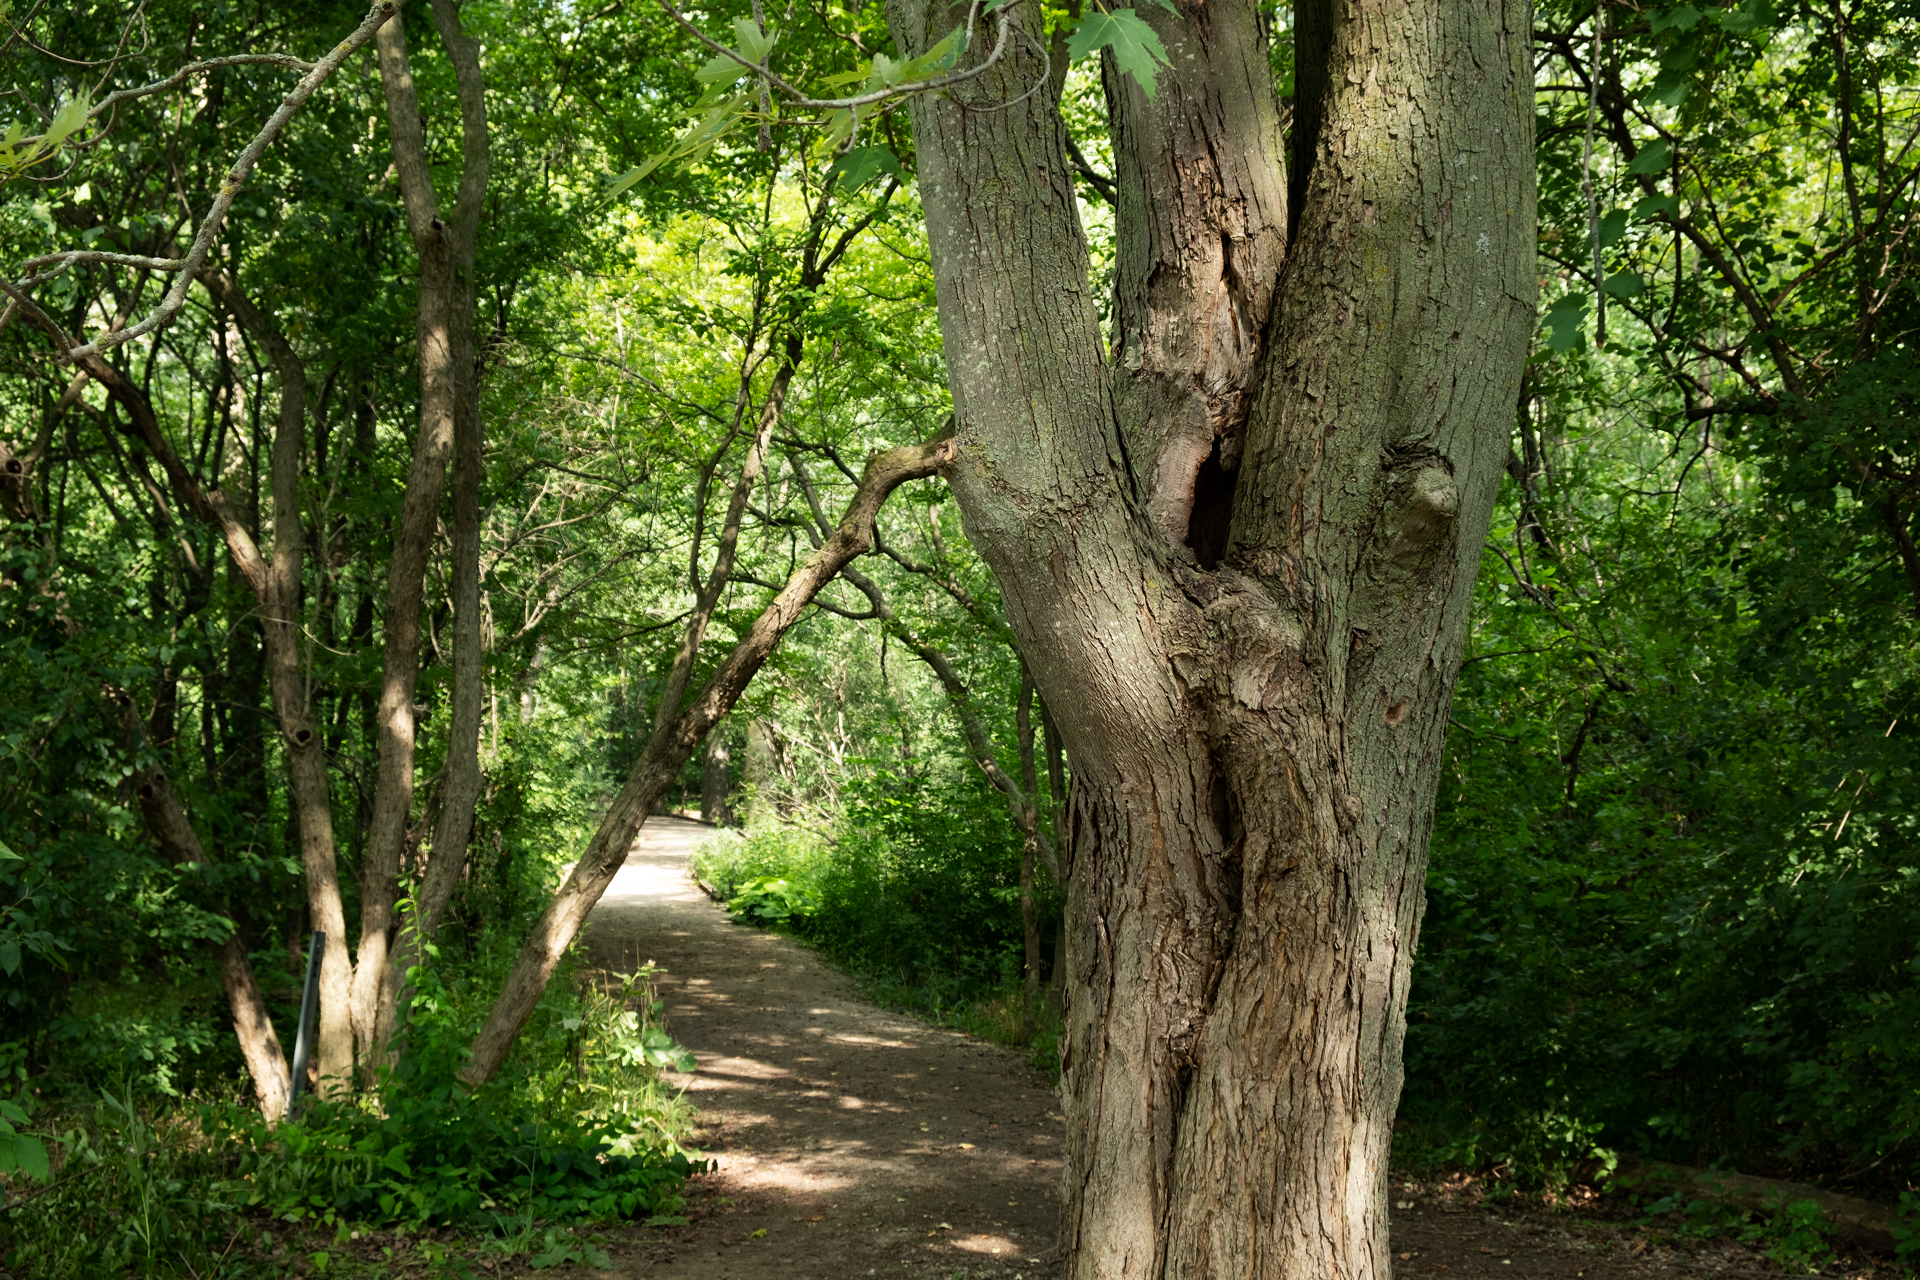 colour photo of an entrance to a trail in an arboreta